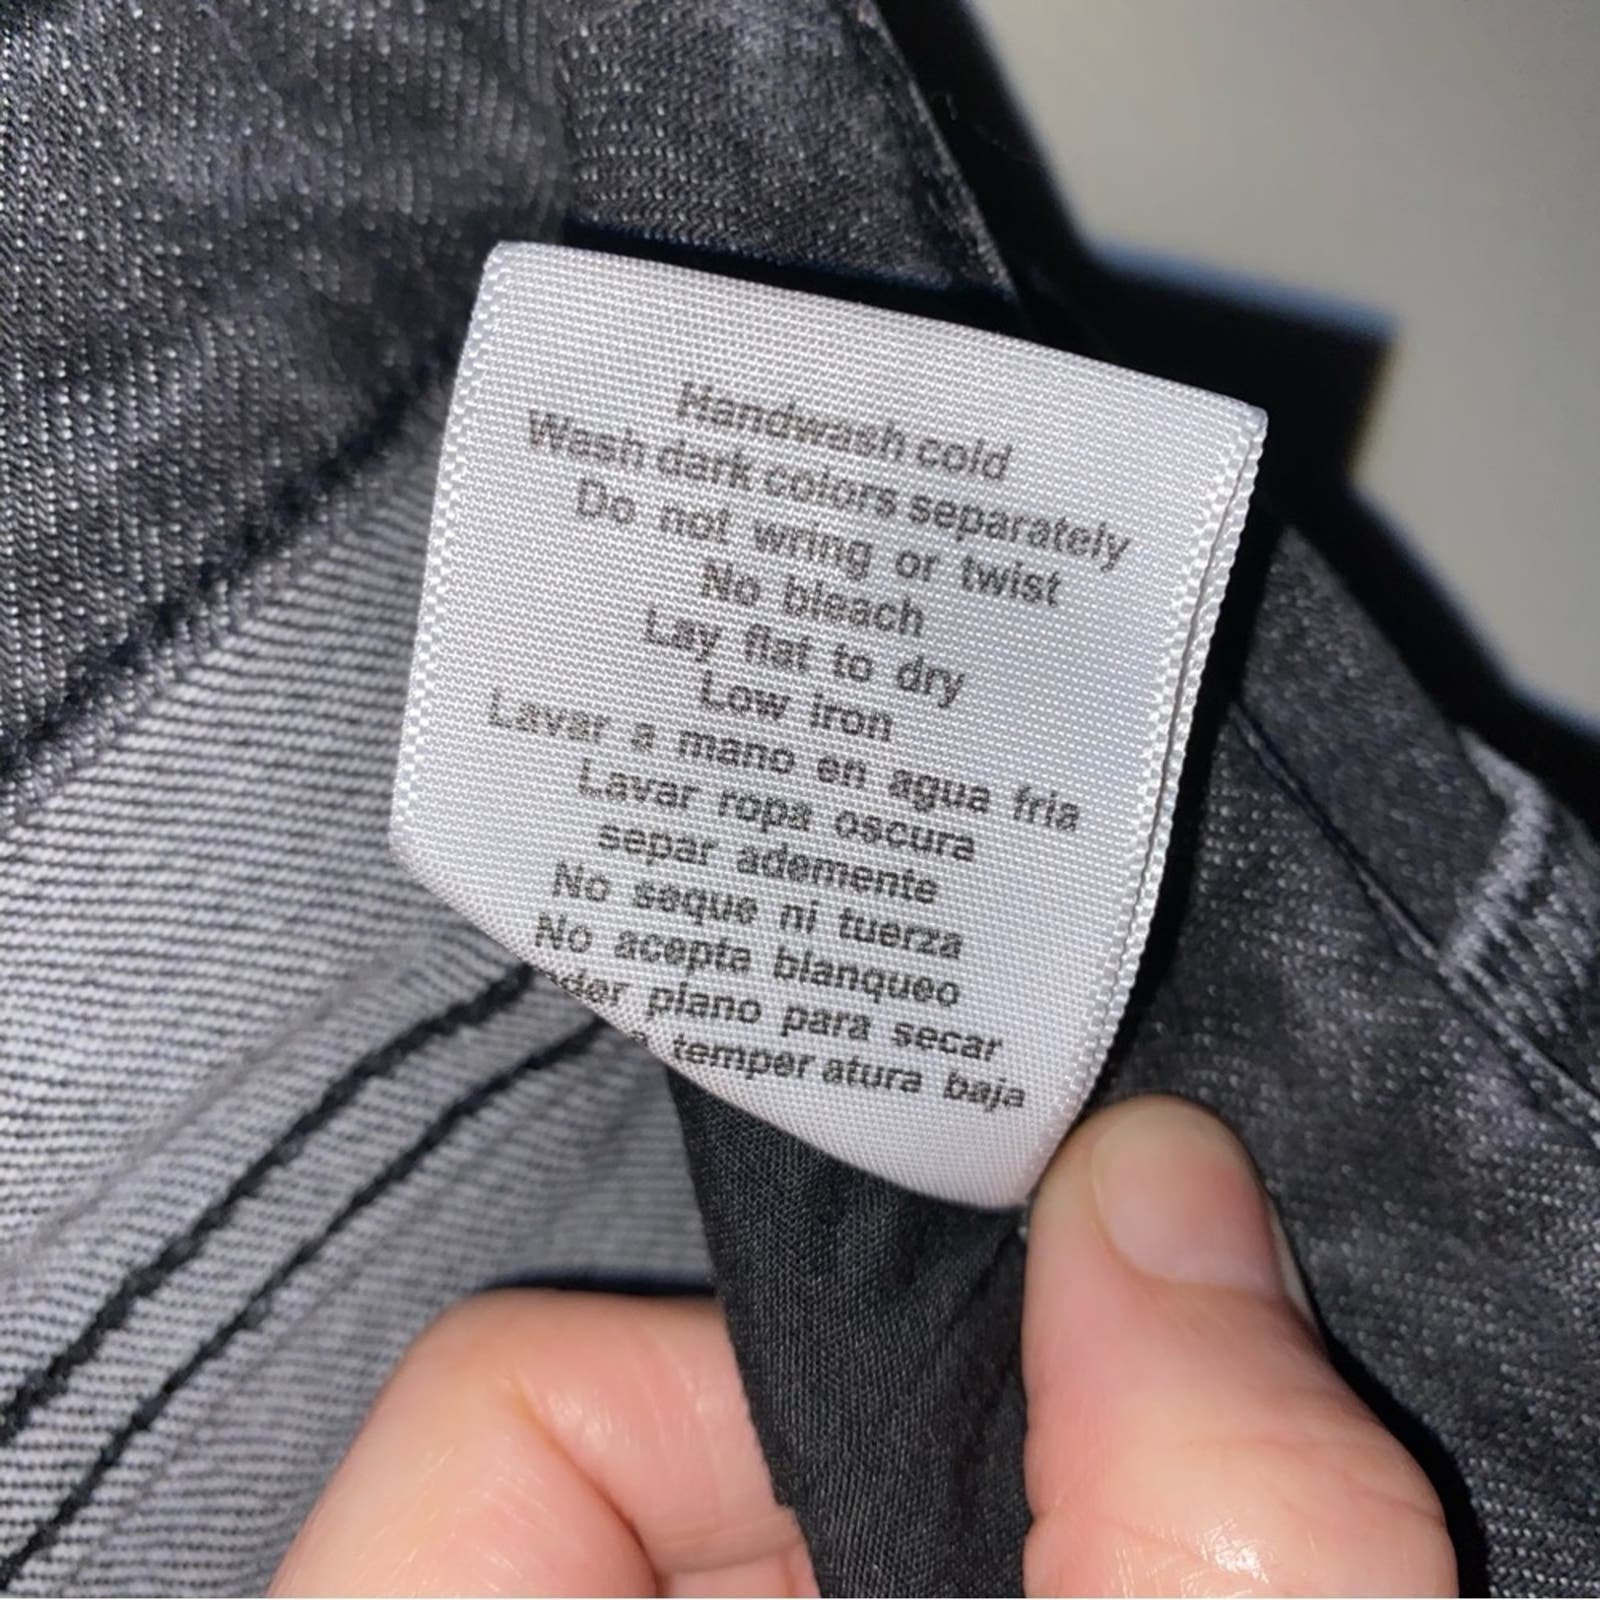 Popular Judy Blue Women´s Black Denim Boyfriend Fit Faded Wash Jeans size 29 gGgq0TaQL outlet online shop